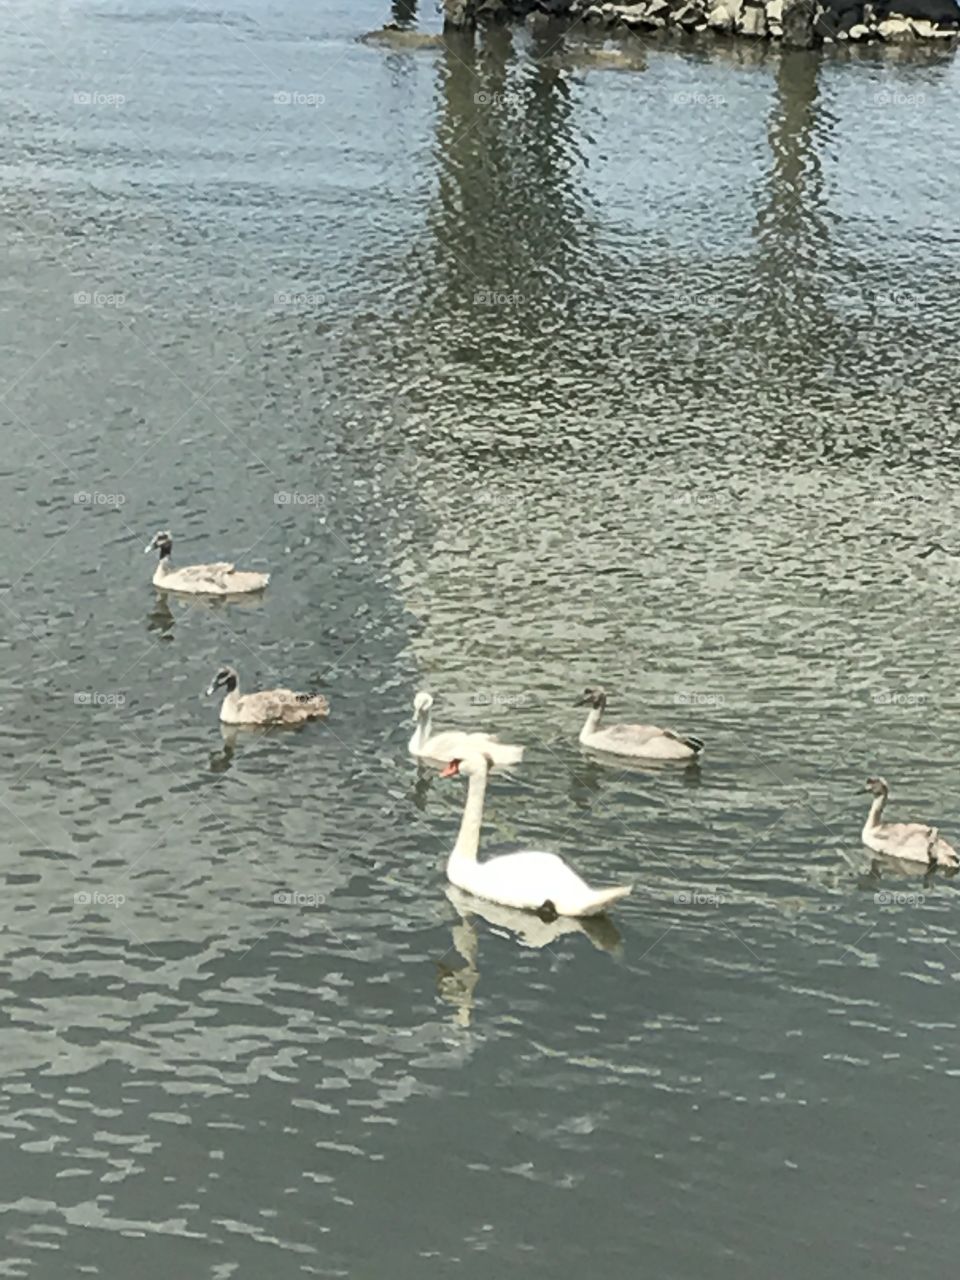 City island swans